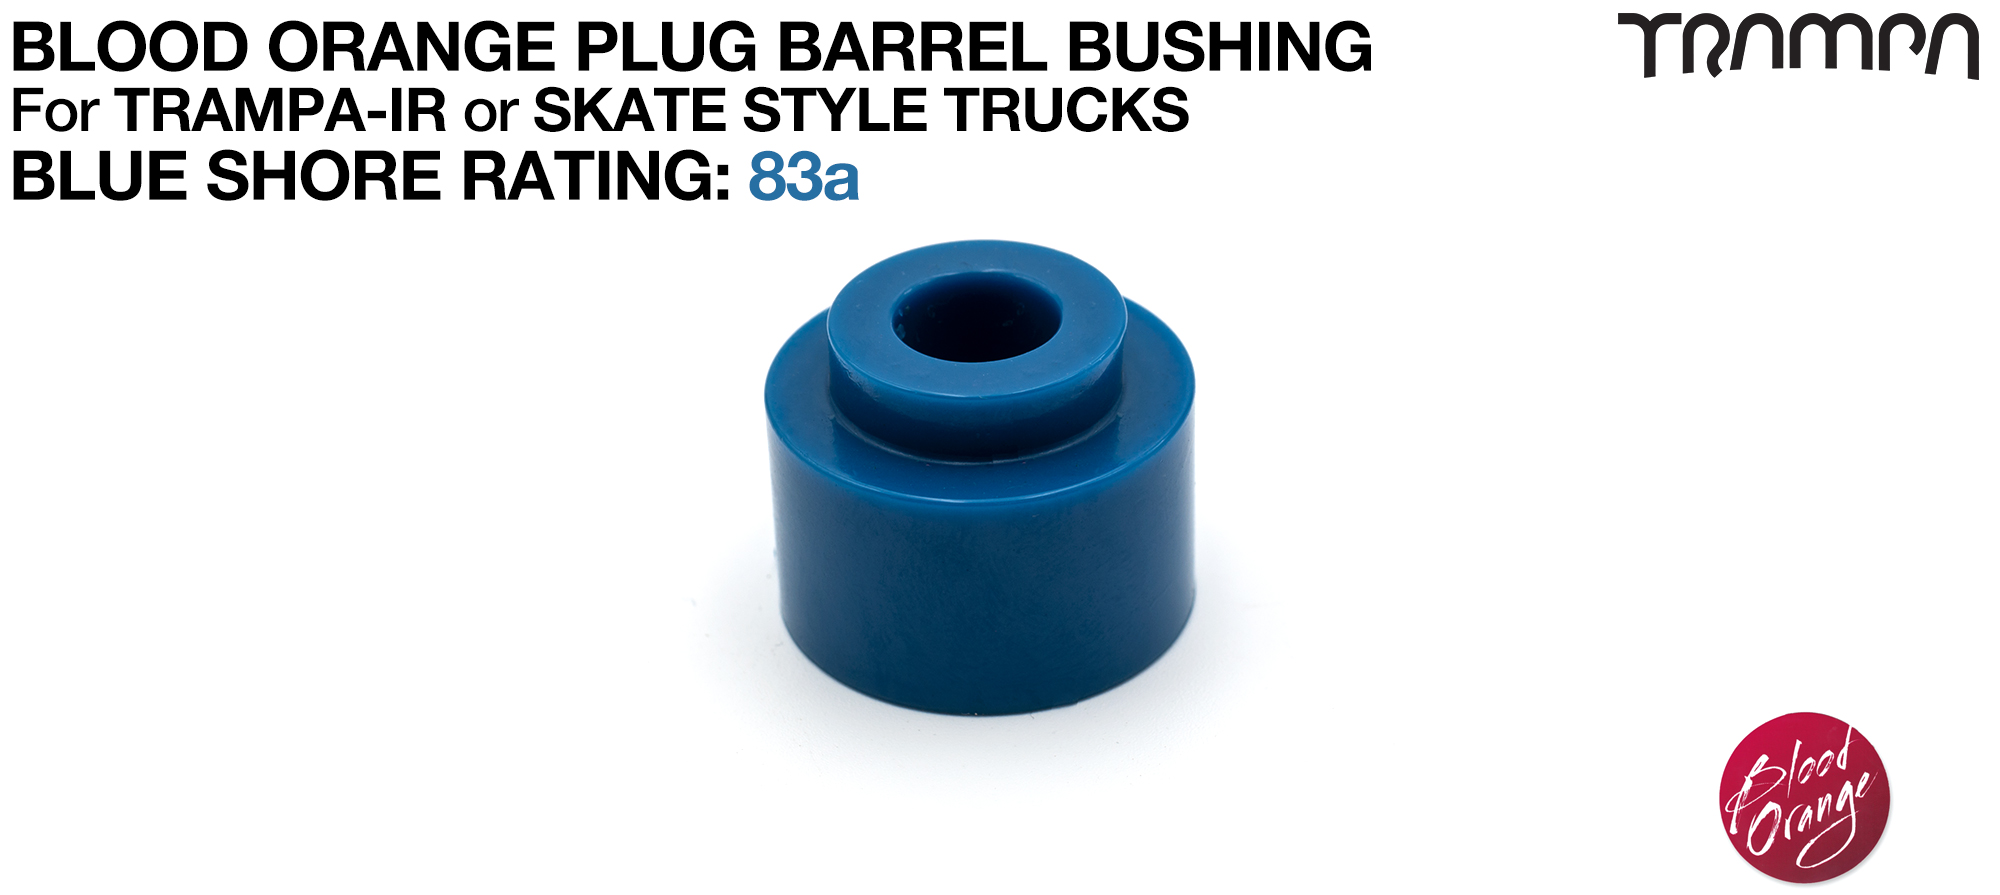 PLUG BARREL Bushings DARK BLUE - 89a  - OUT OF STOCK